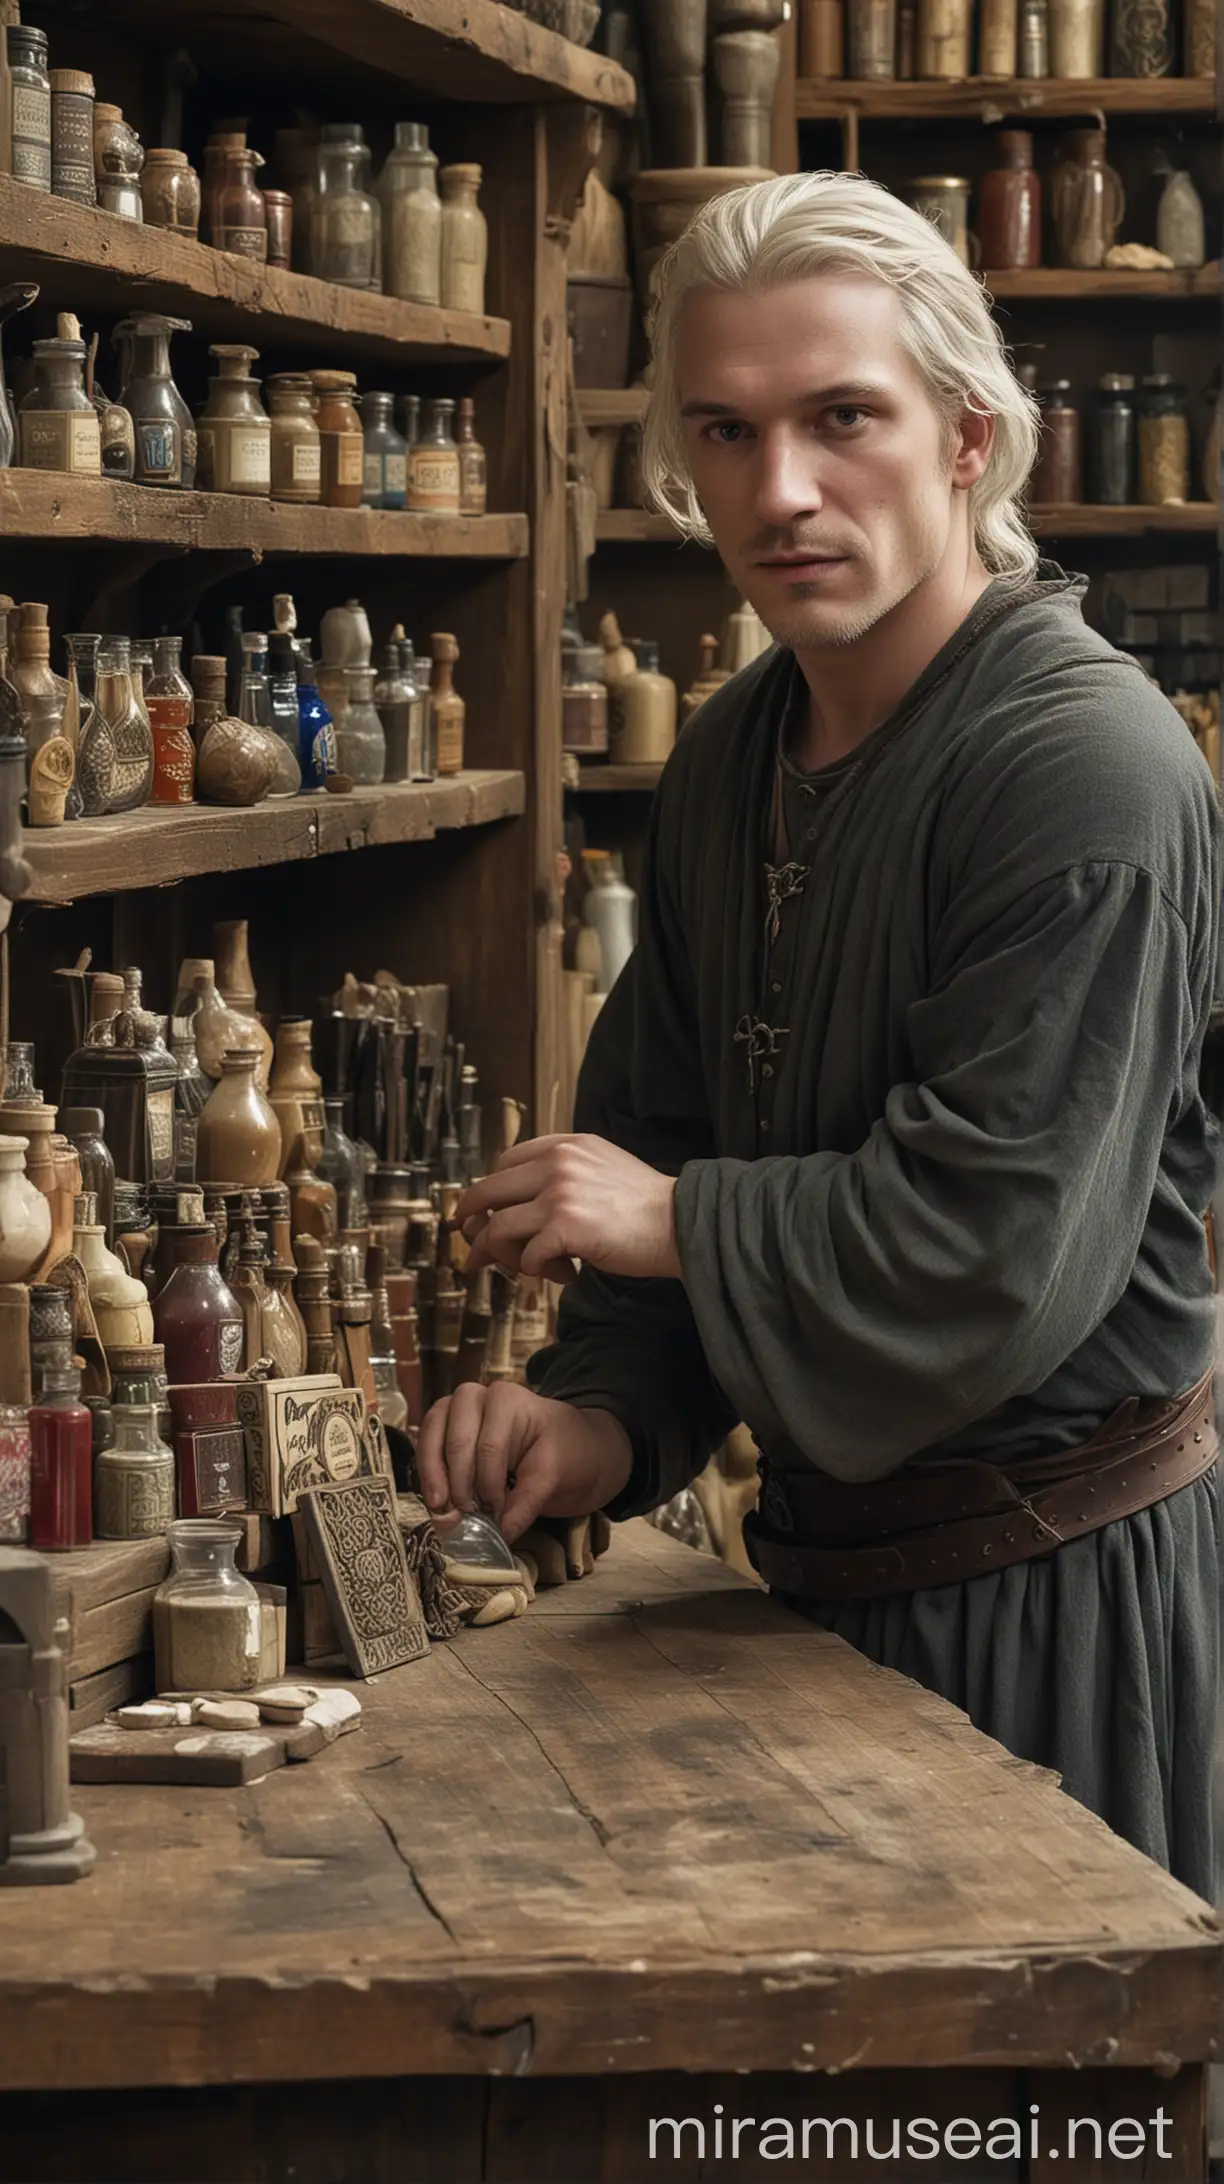 Medieval Shopkeeper with Glowing Skin